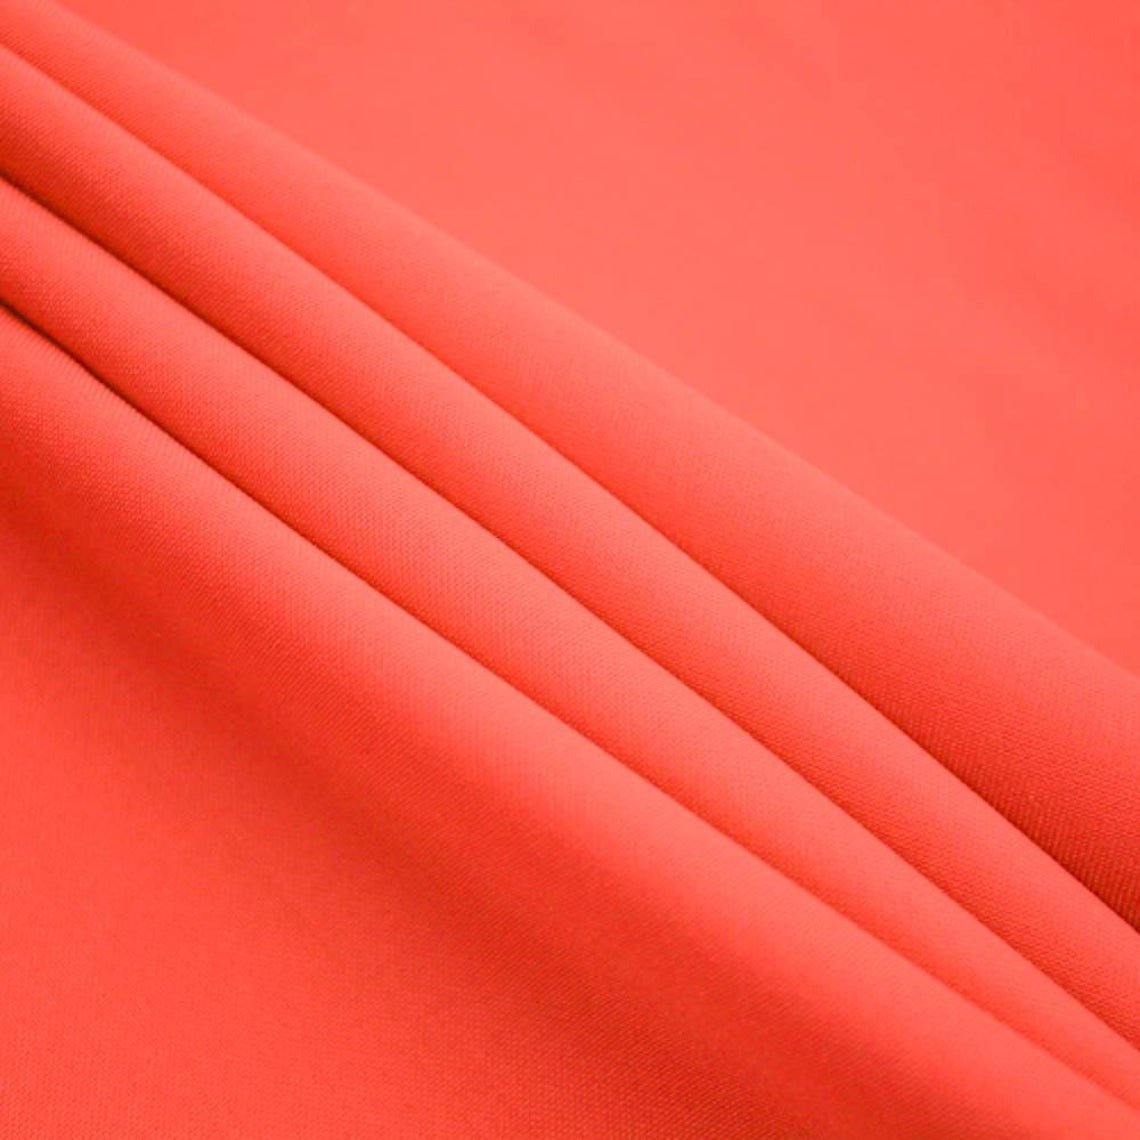 Poly Poplin Fabric By The Roll (40 Yards Bolt) Wholesale FabricPoplin FabricICE FABRICSICE FABRICSBy The Roll (60" Wide)CoralPoly Poplin Fabric By The Roll (40 Yards Bolt) Wholesale Fabric ICE FABRICS